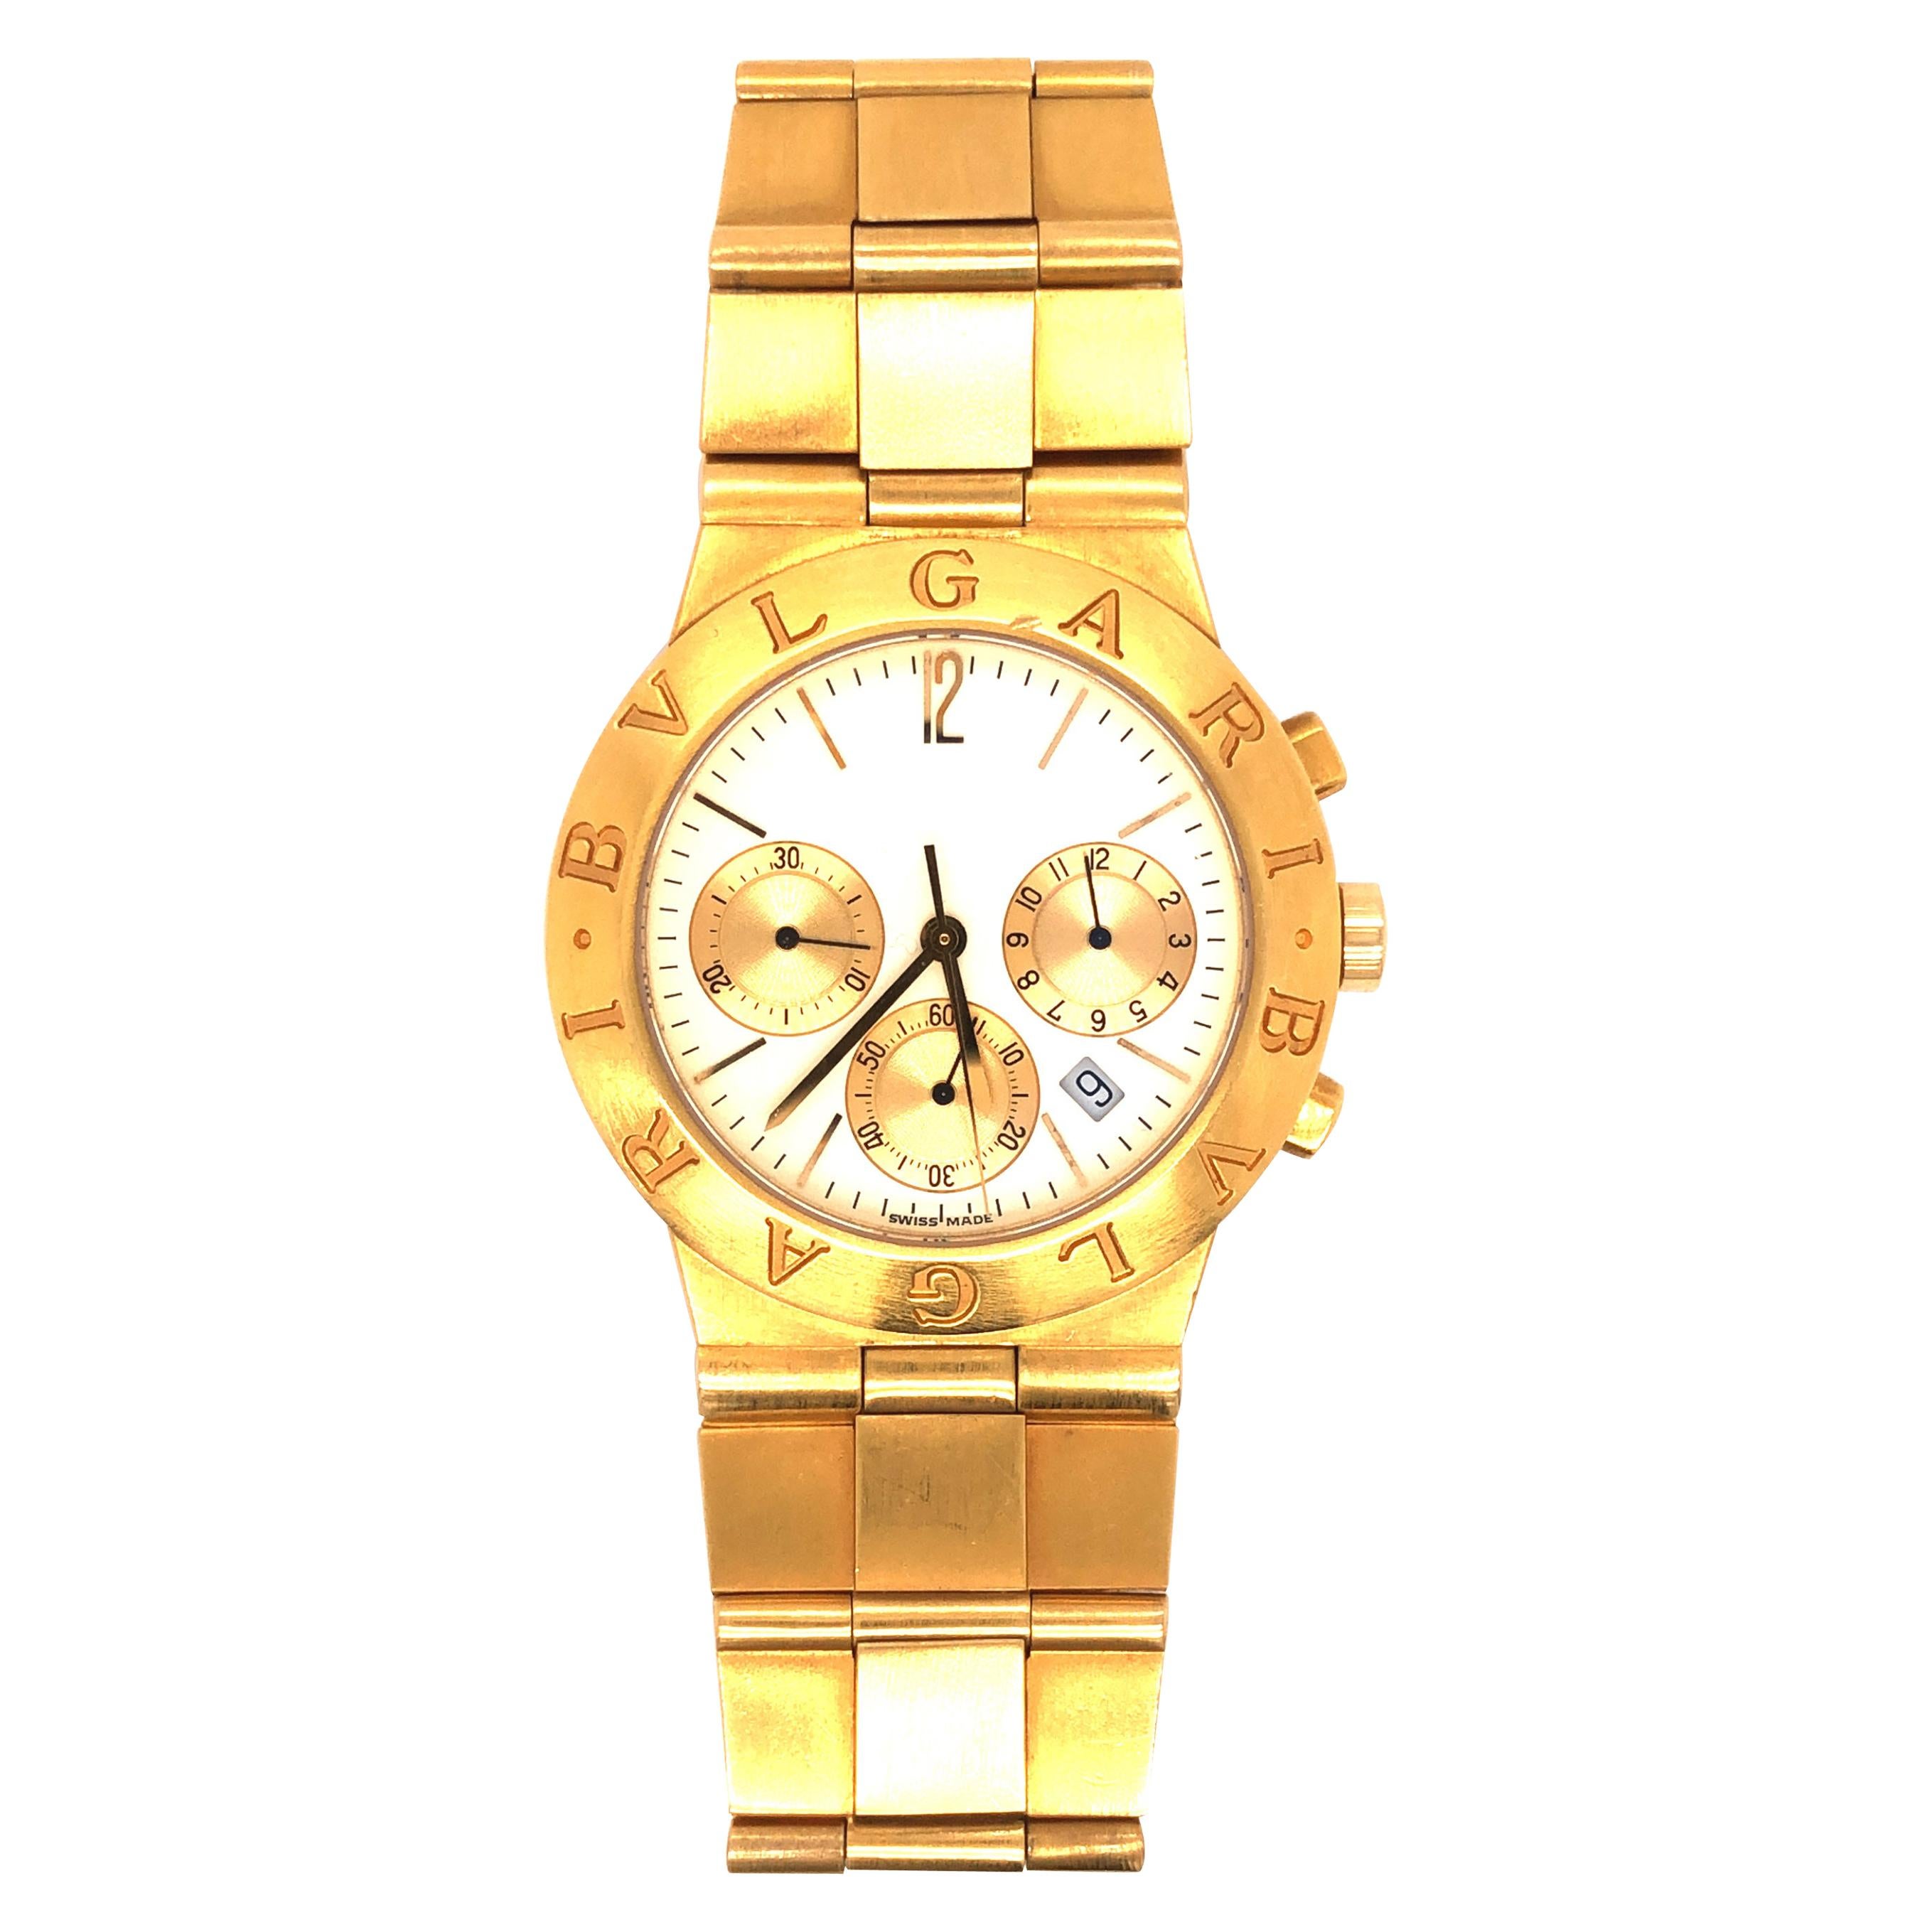 Bvlgari Diagono Scuba 18 Karat Yellow Gold Chronograph Automatic Watch